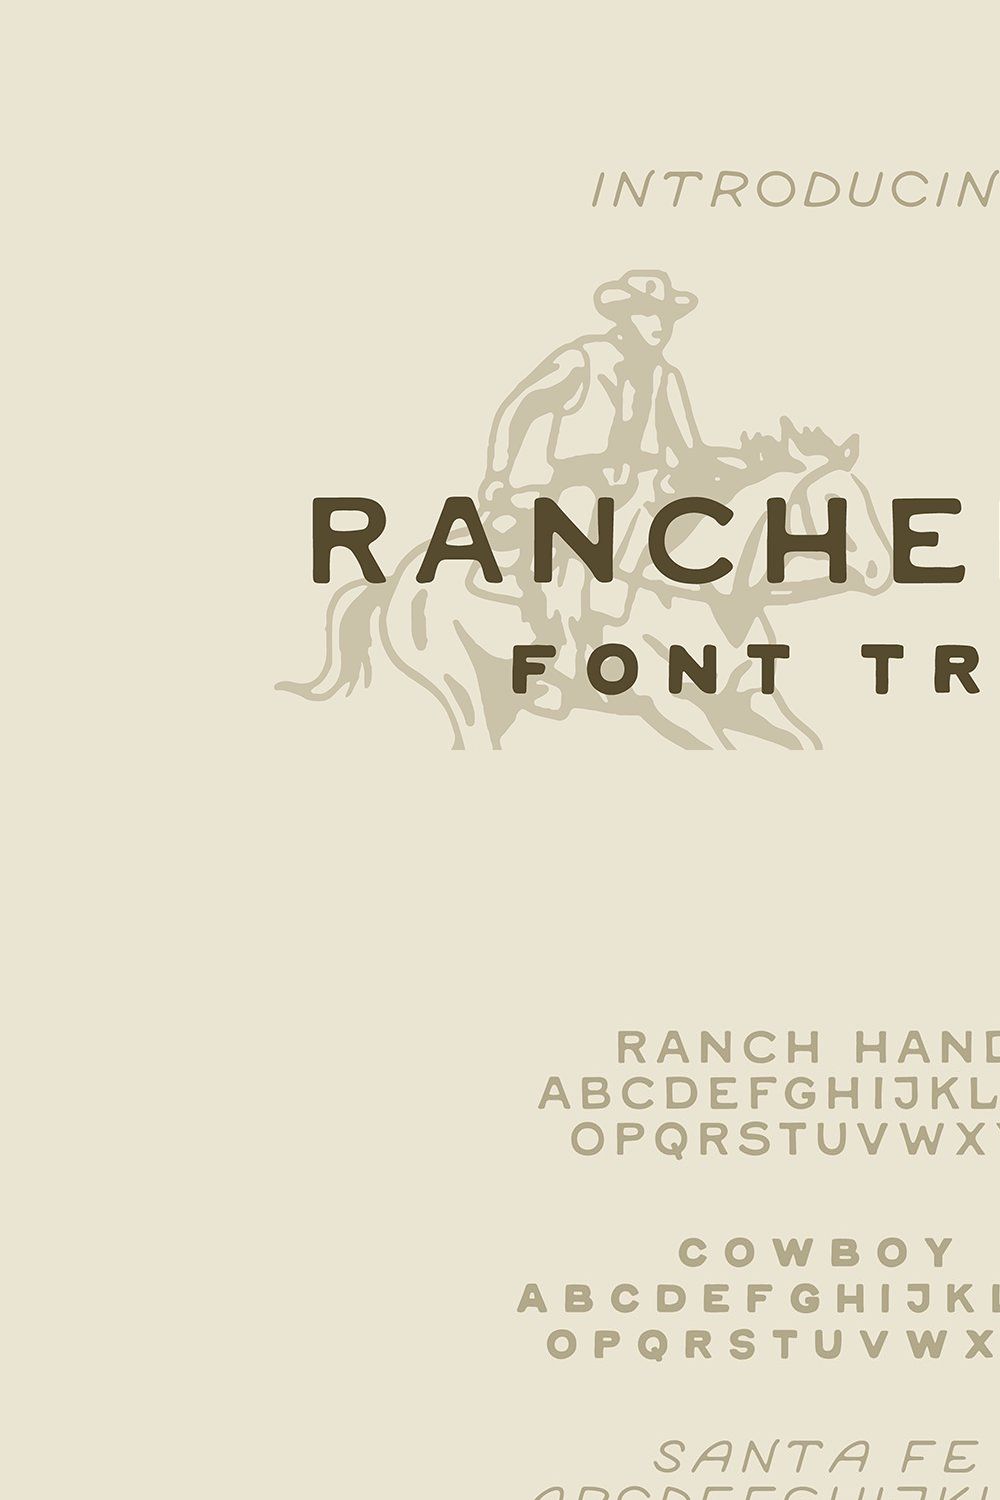 Rancheros - Western Font Trio pinterest preview image.